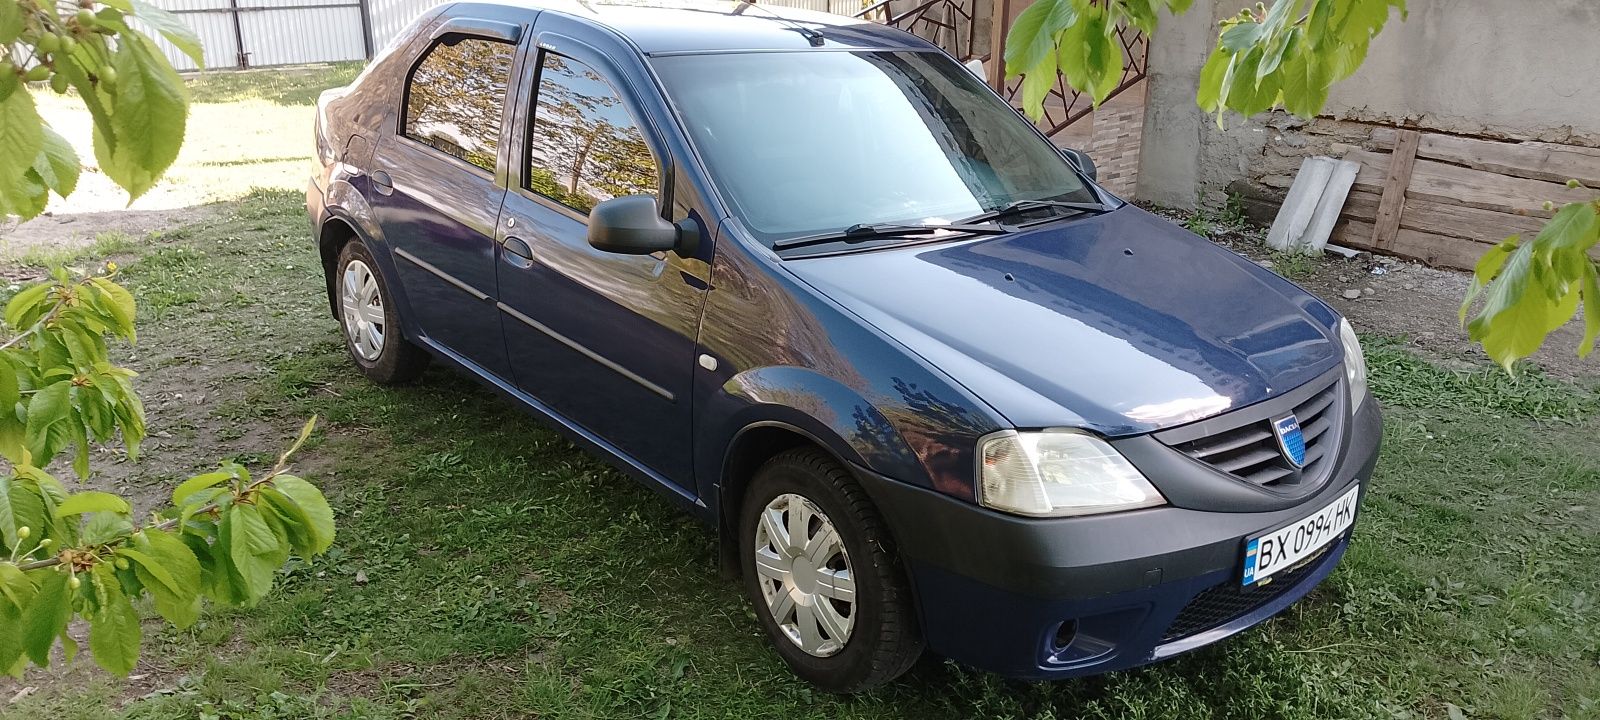 Dacia Logan 1.4 газ/бензин